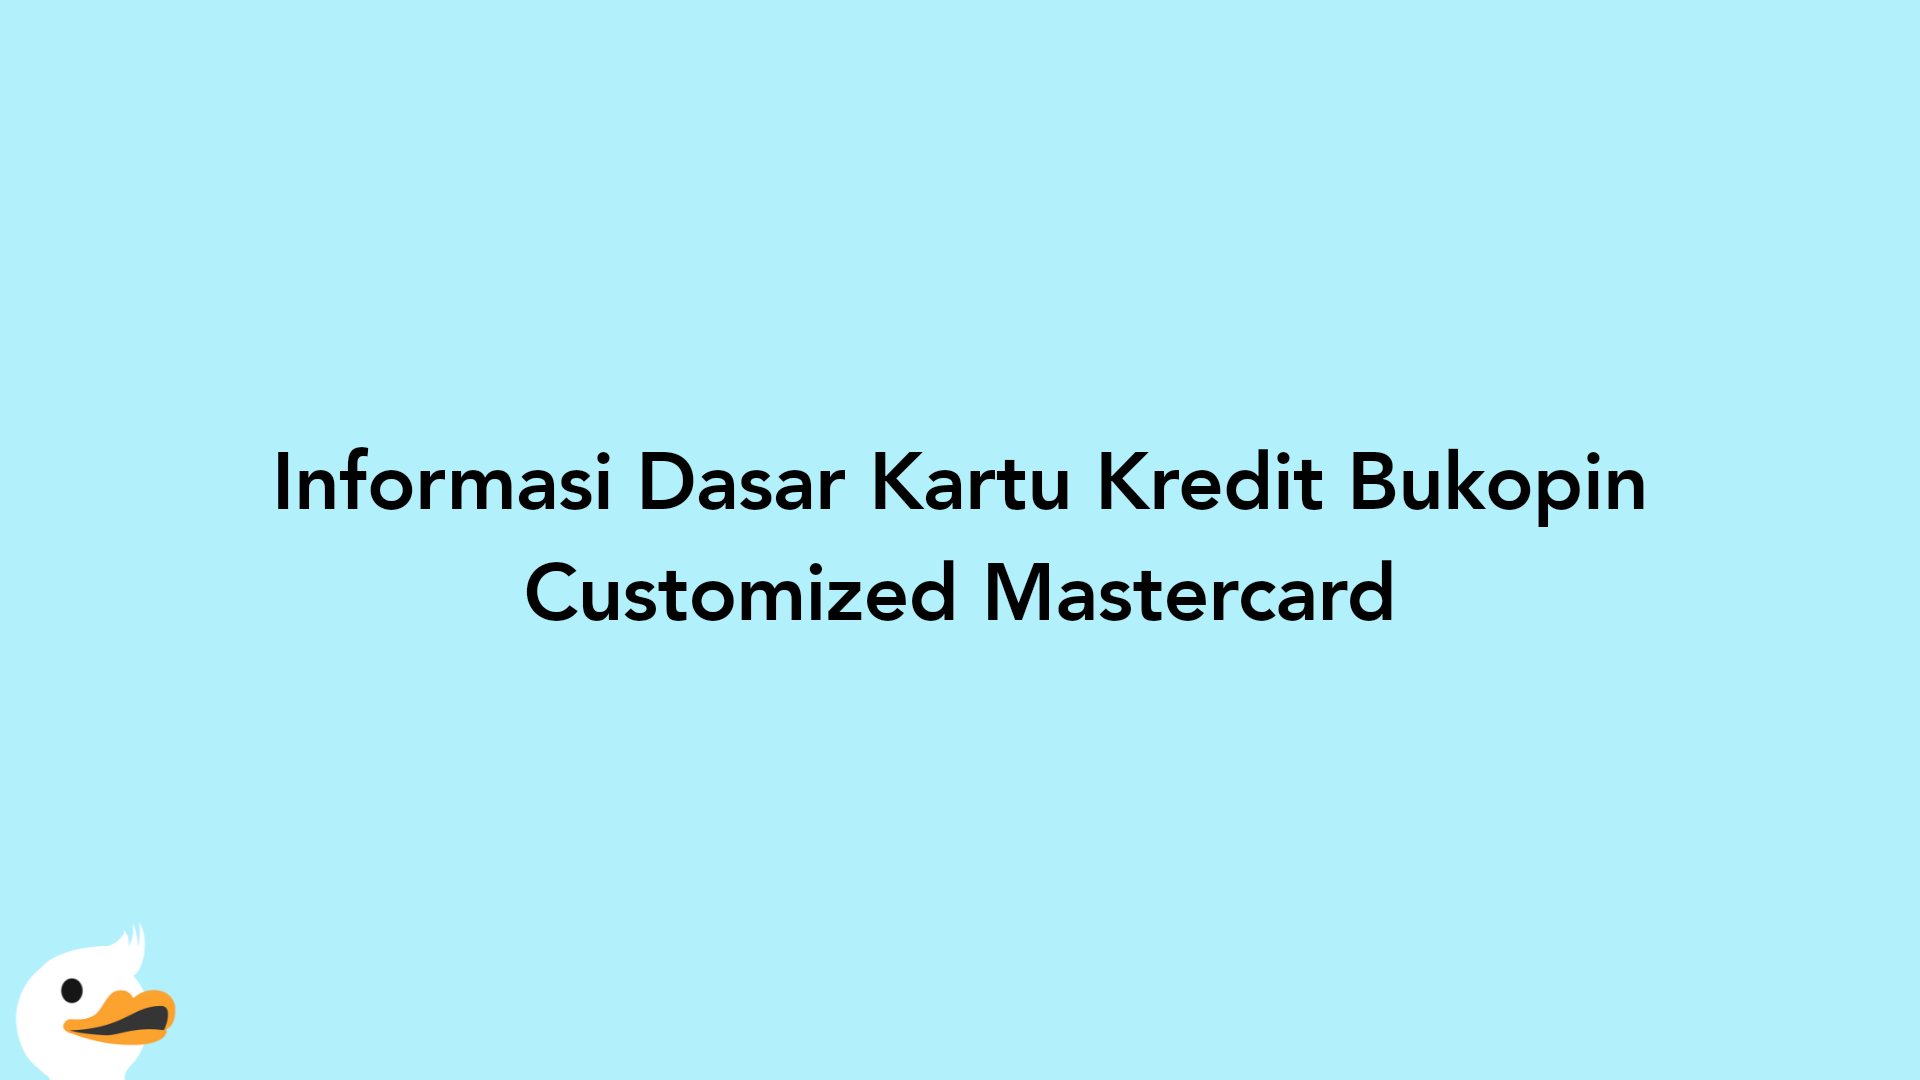 Informasi Dasar Kartu Kredit Bukopin Customized Mastercard